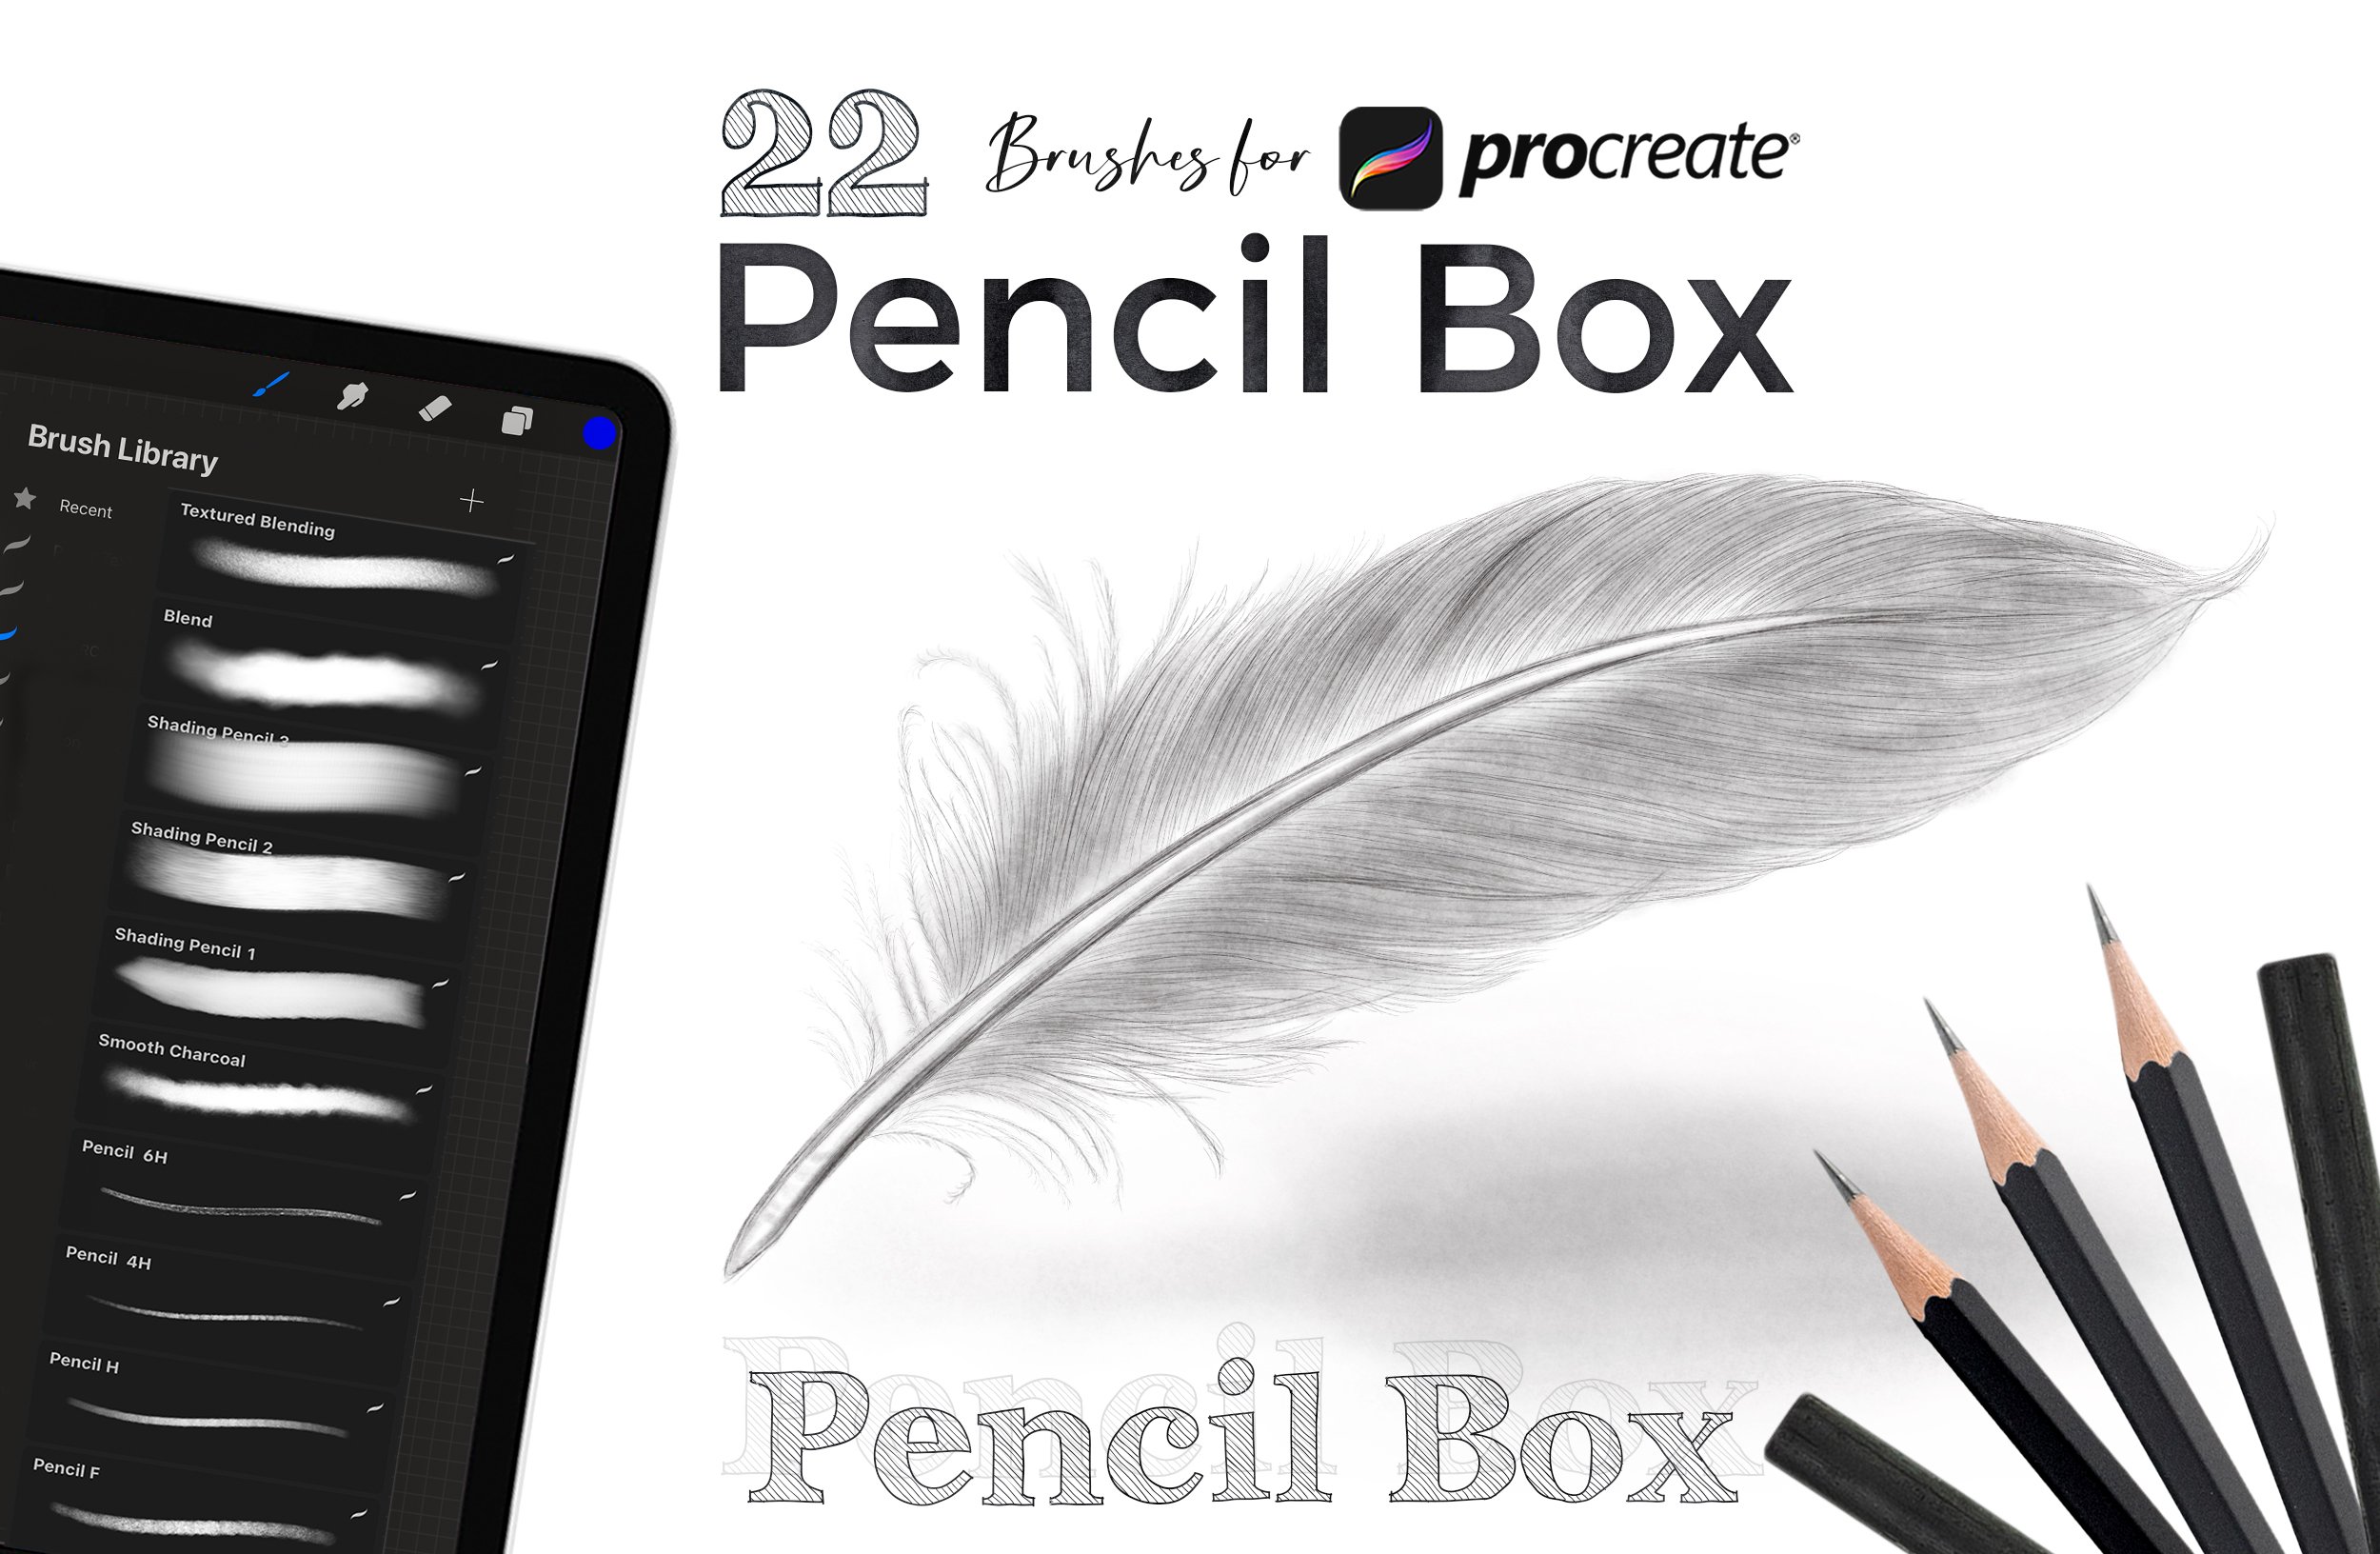 Graphite Pencils Brushes Procreate cover image.